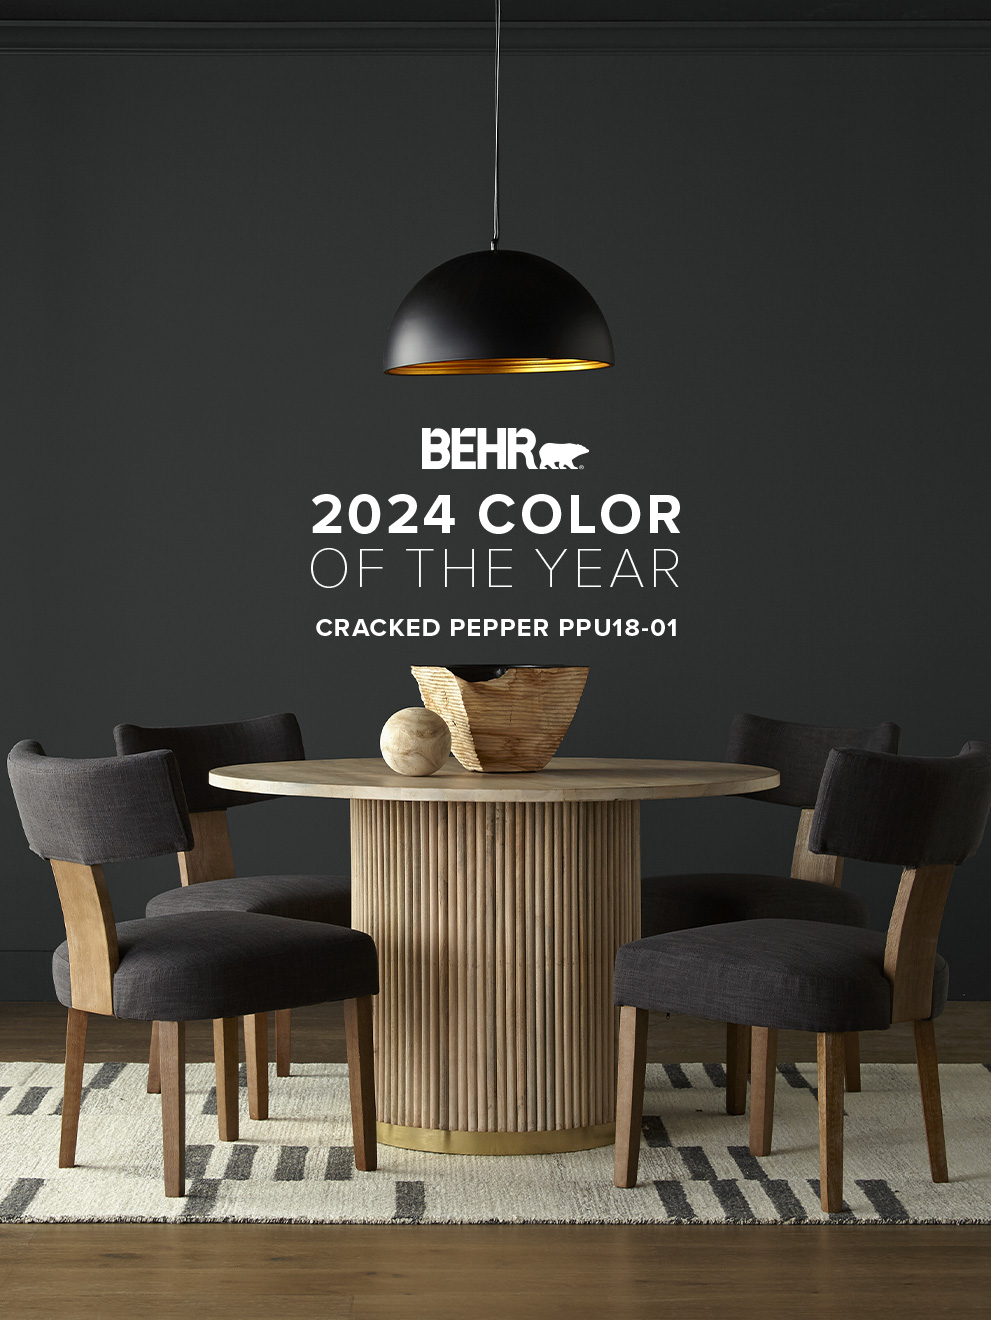 Pepper: New color alert